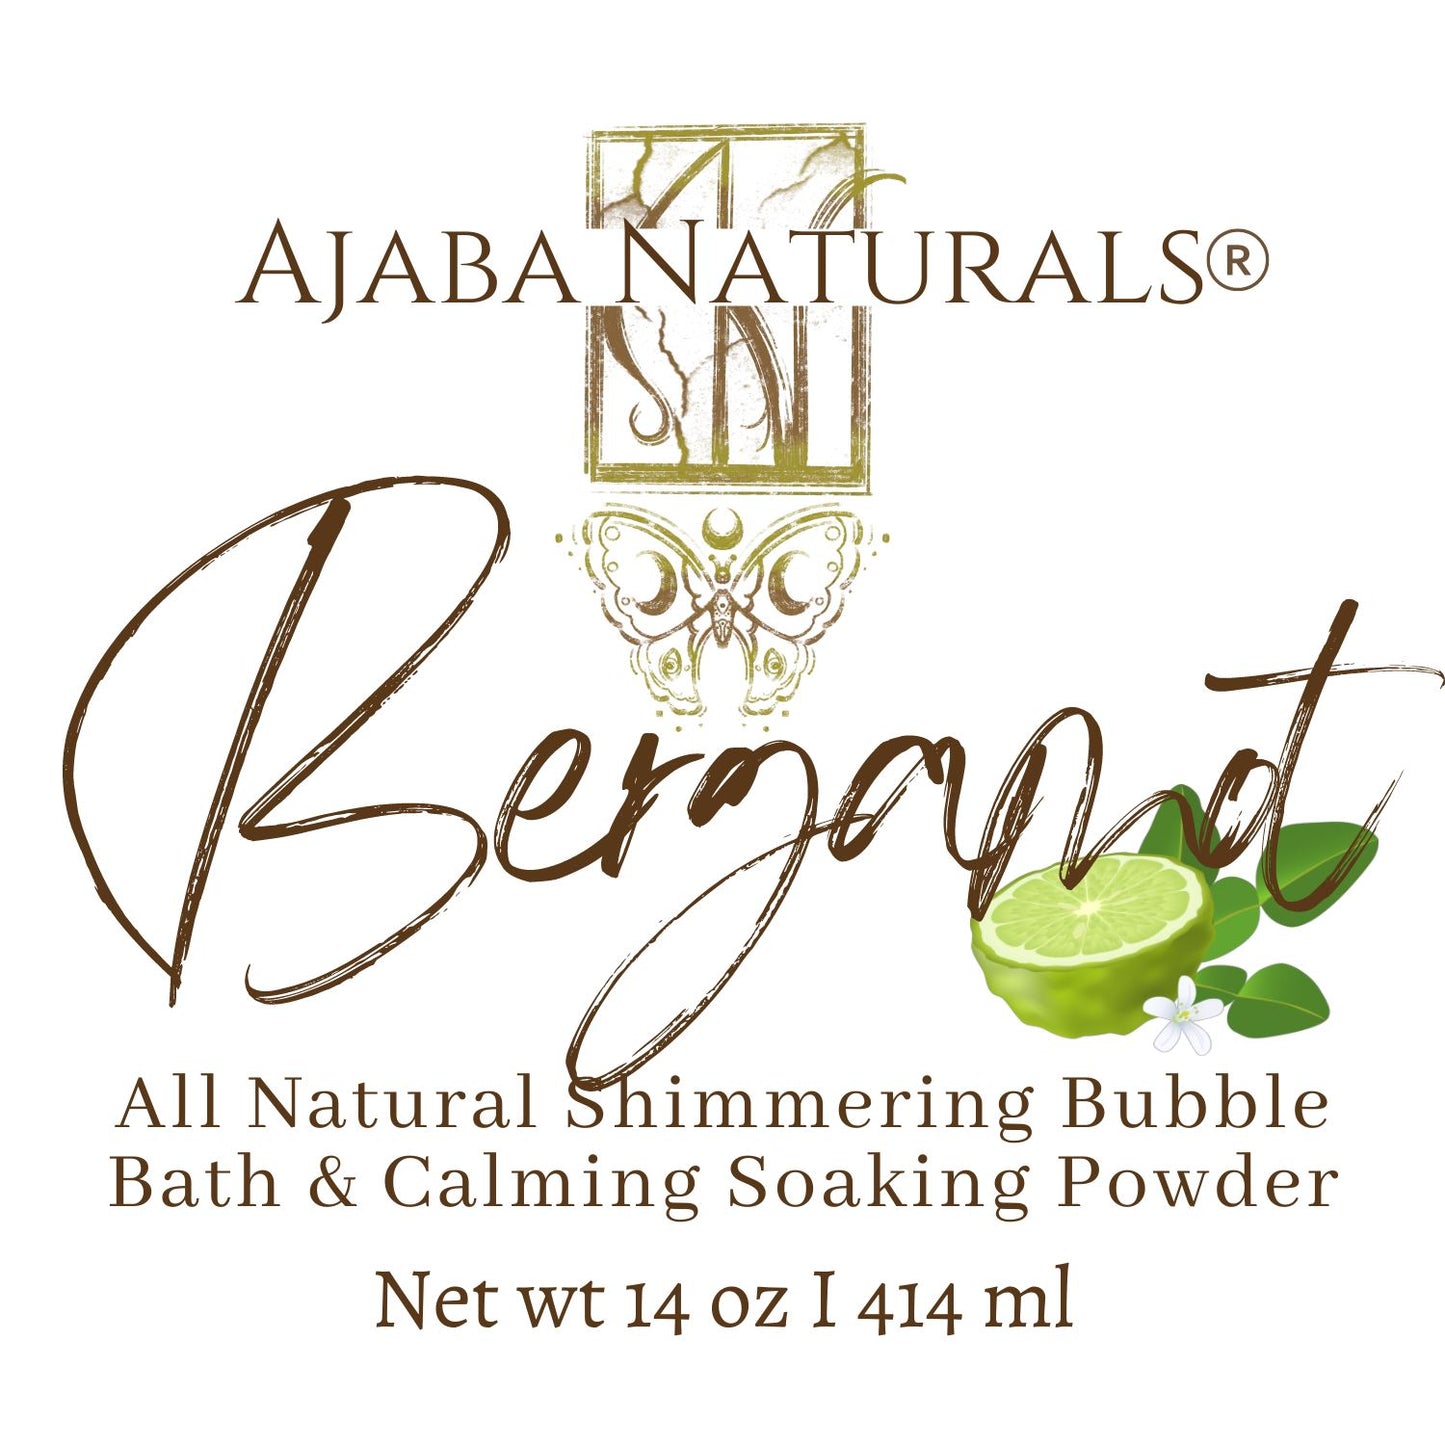 All Natural Shimmering Bubble Bath and Calming Soak Powder Bath Soak AJABA NATURALS® Bergamot 